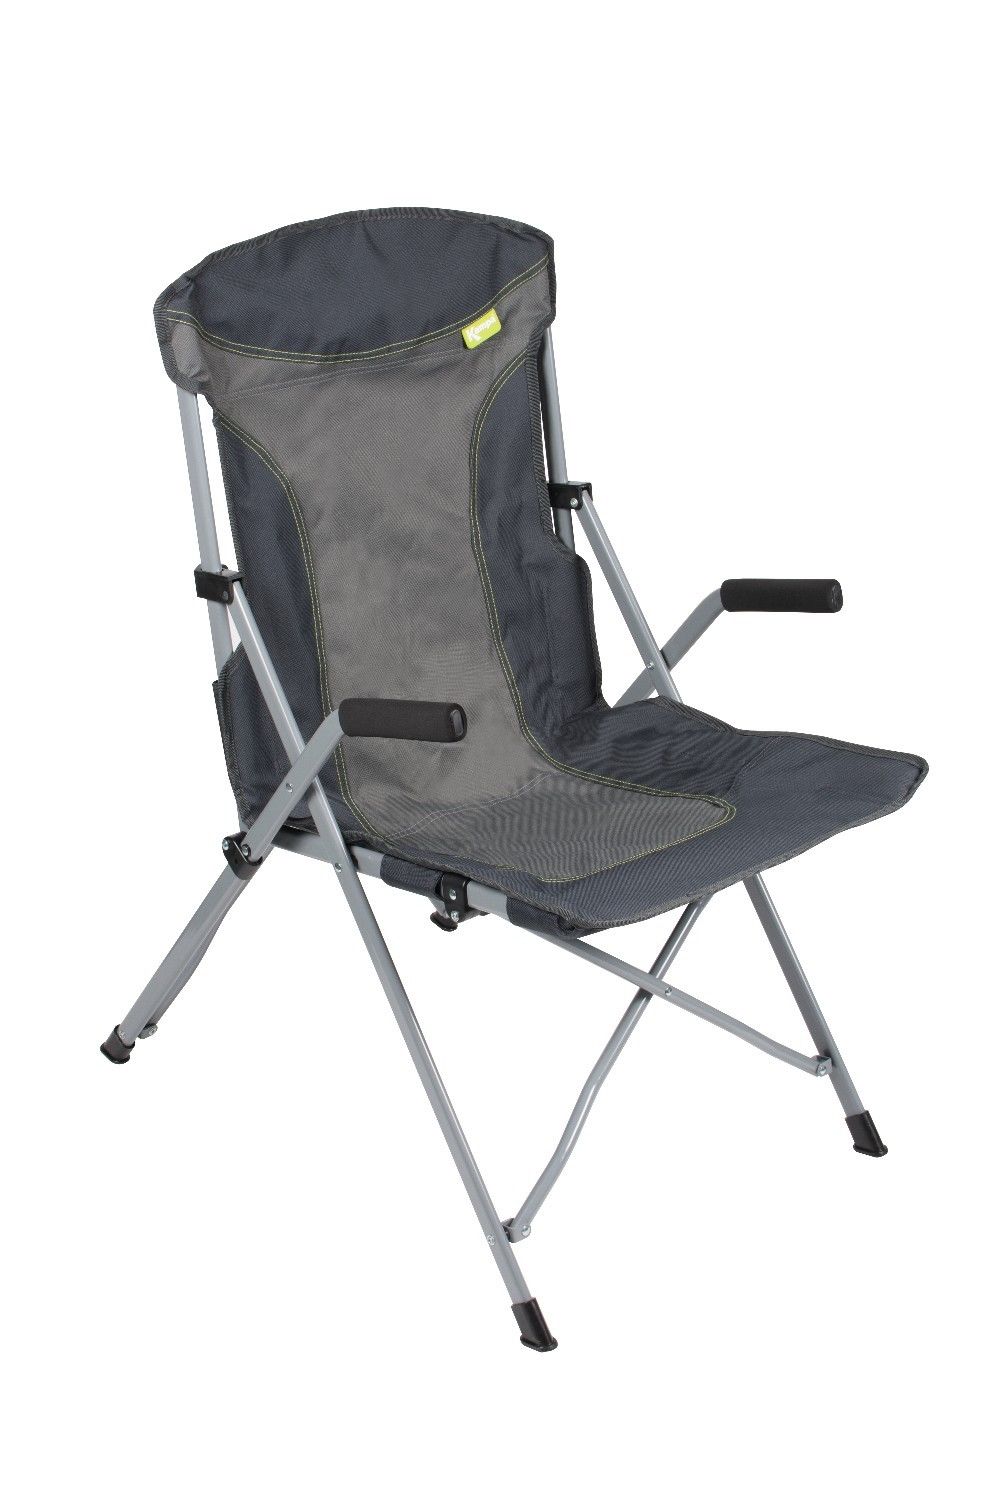 Kampa Lightweight Folding Easy In Easy Out Camping Chair Caravan Stuff 4 U